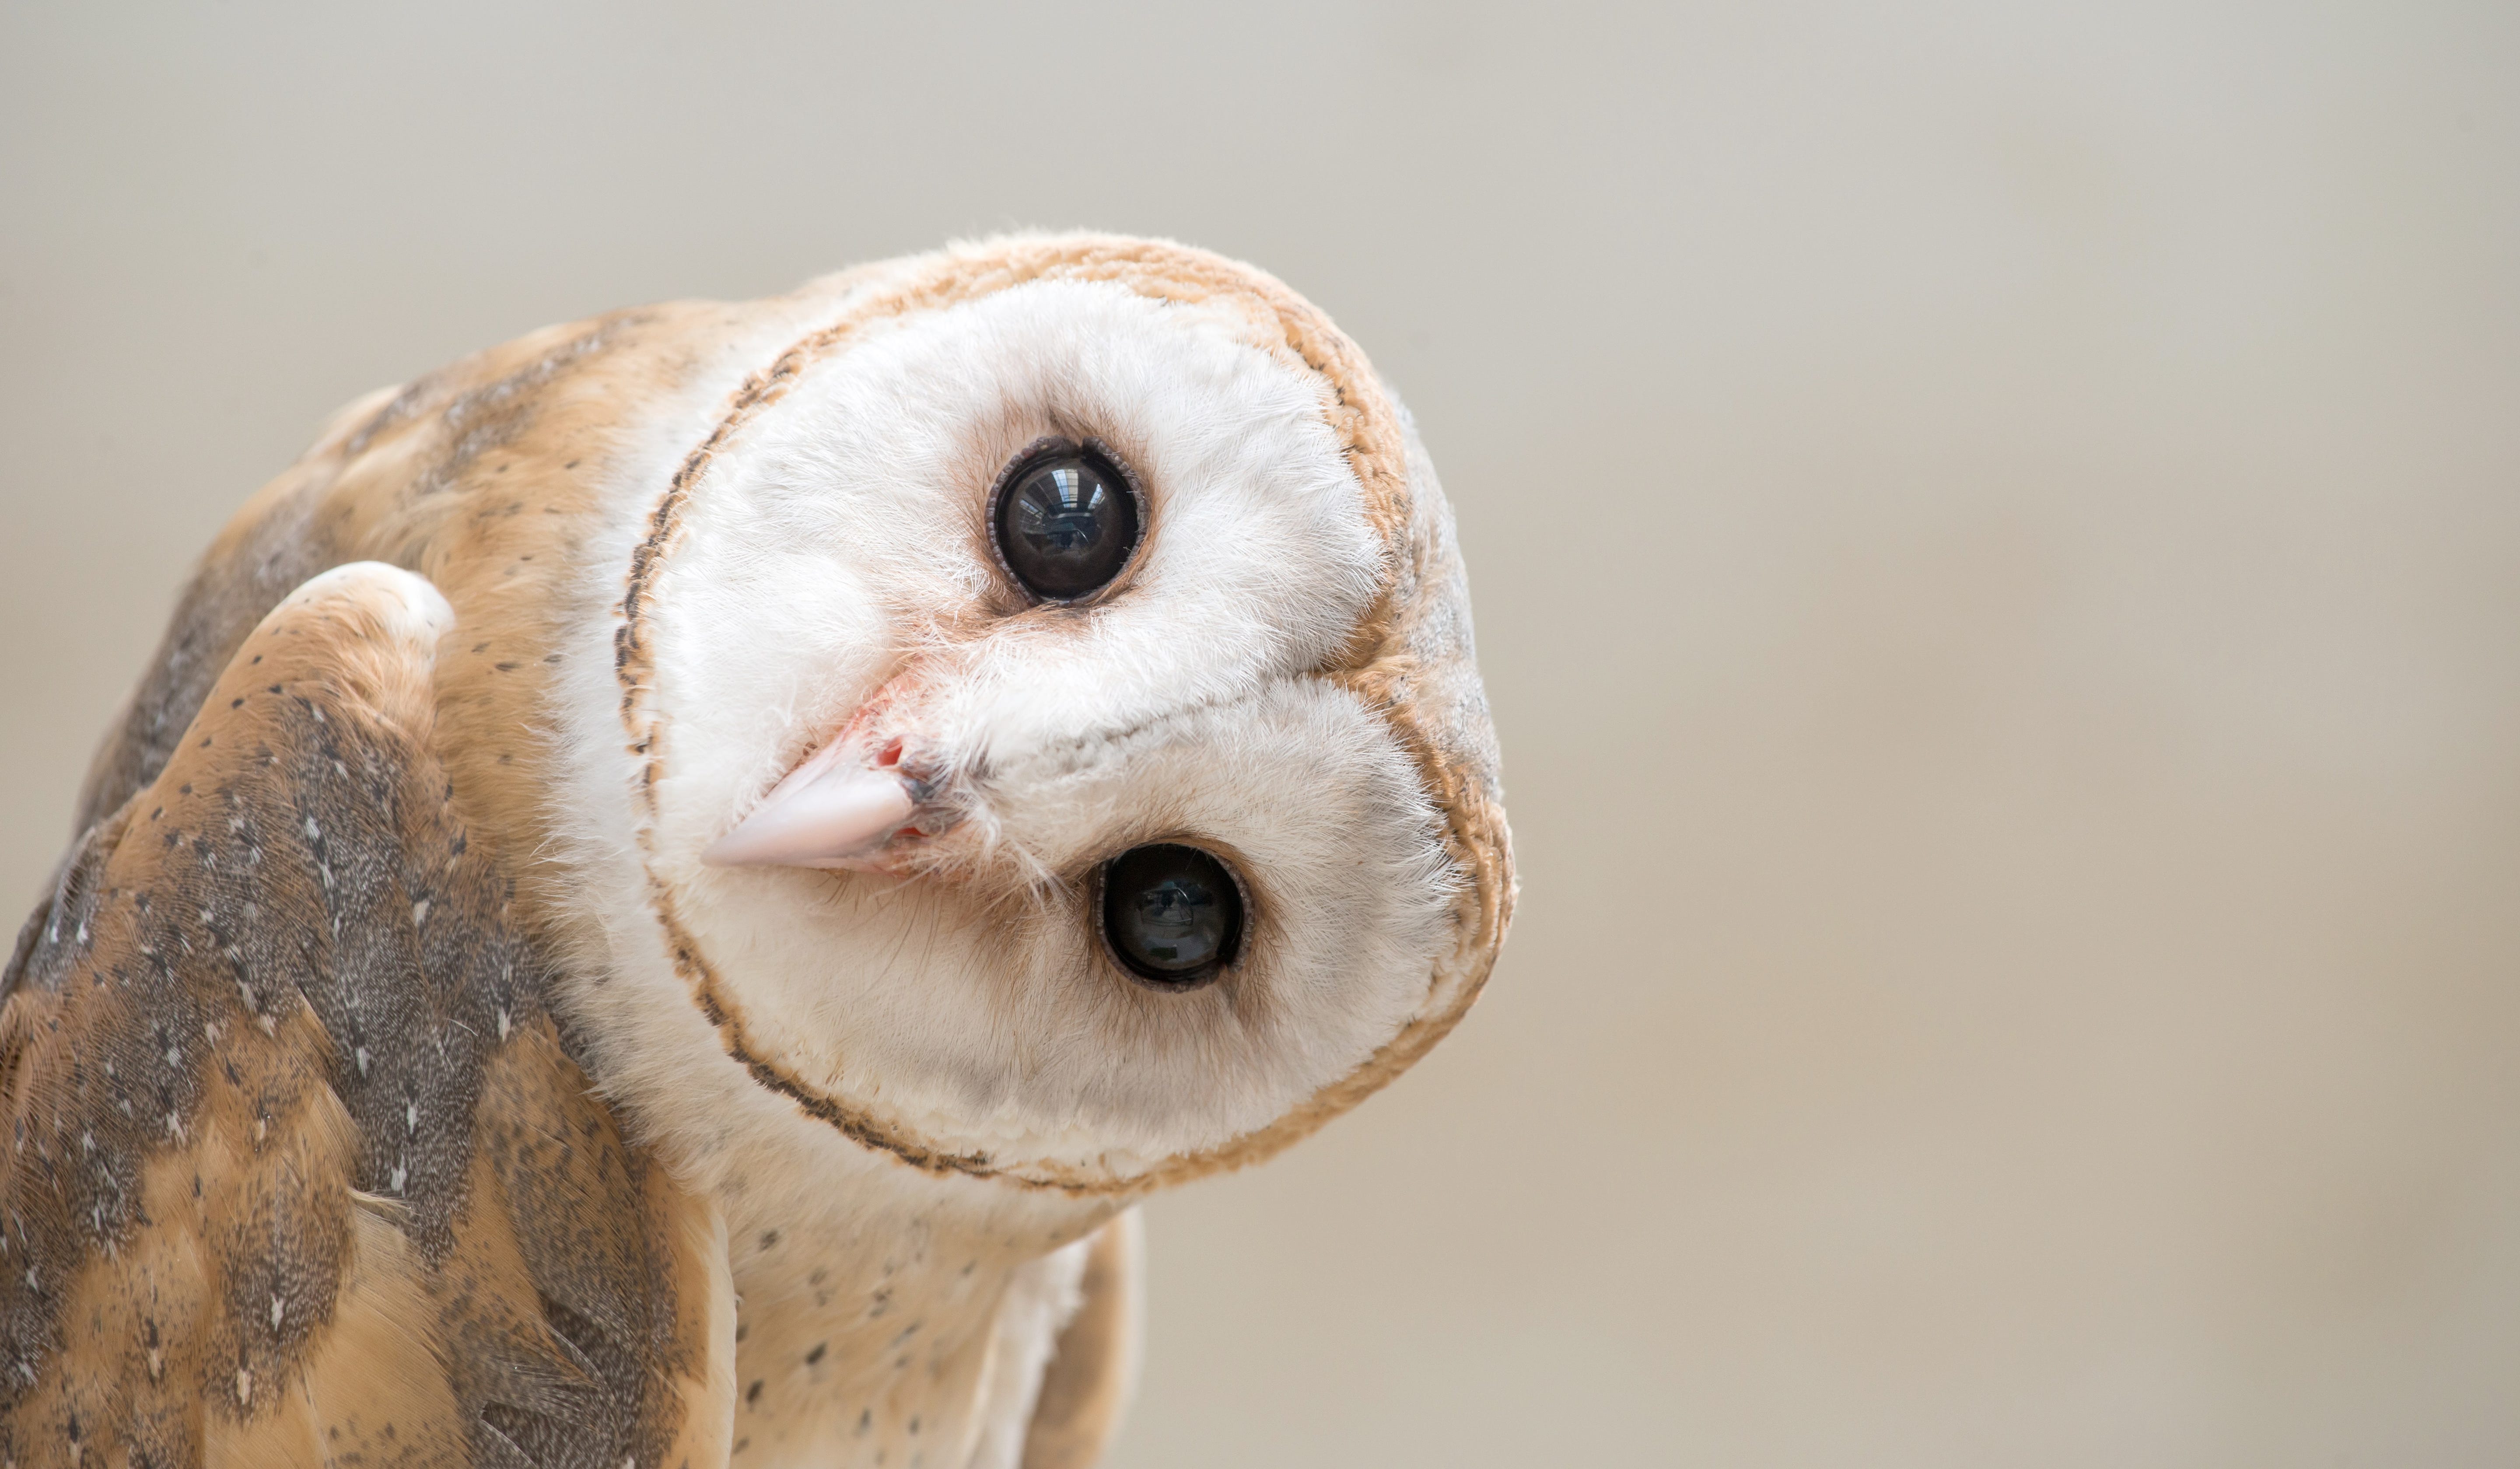 Barn owl, head sideways, looking at you